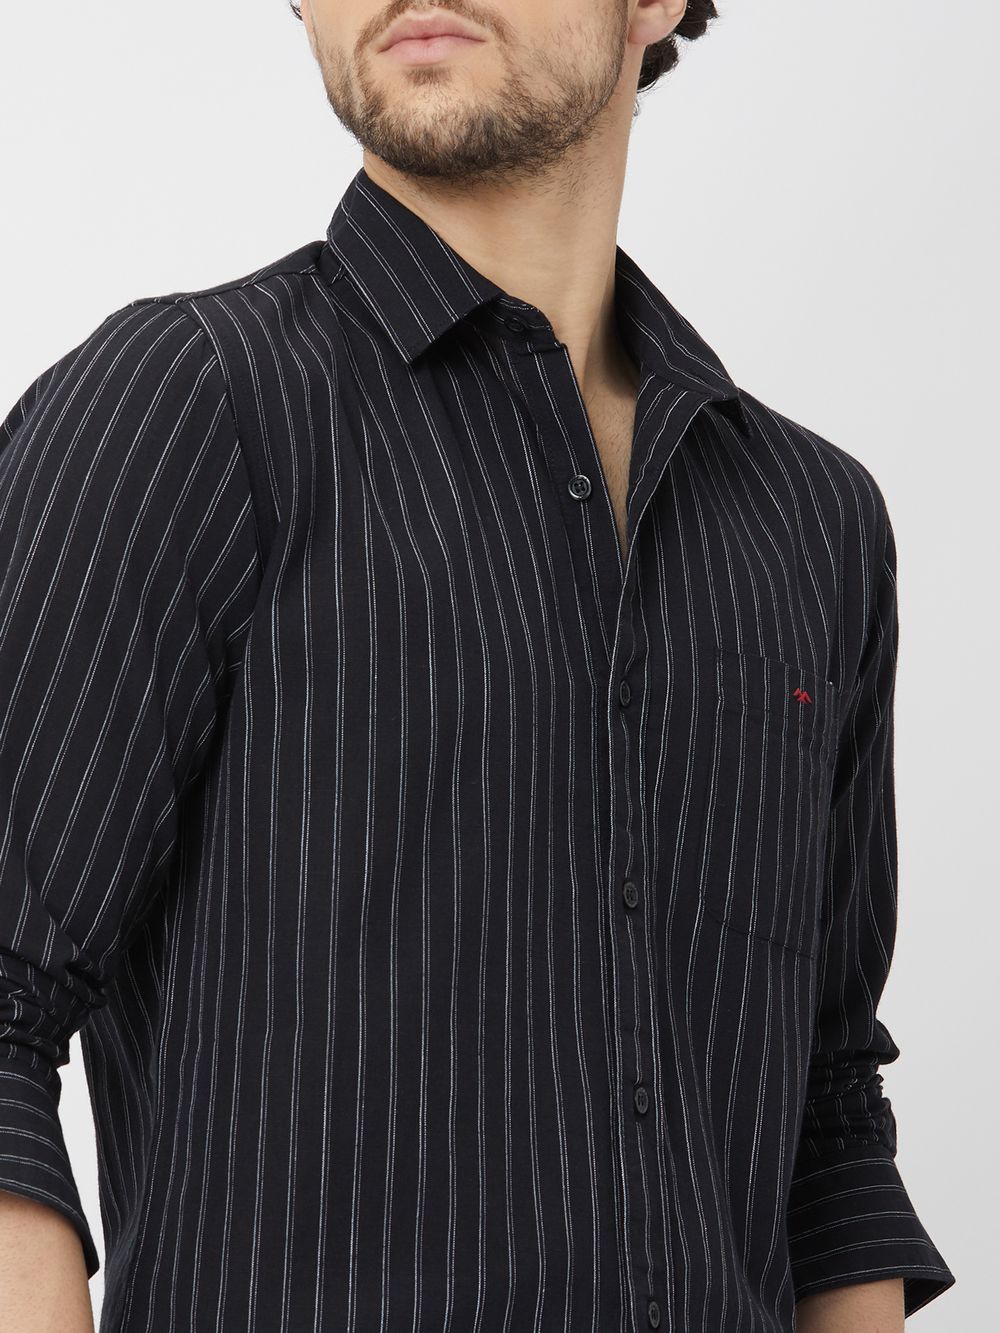 Black Pin Stripe Shirt